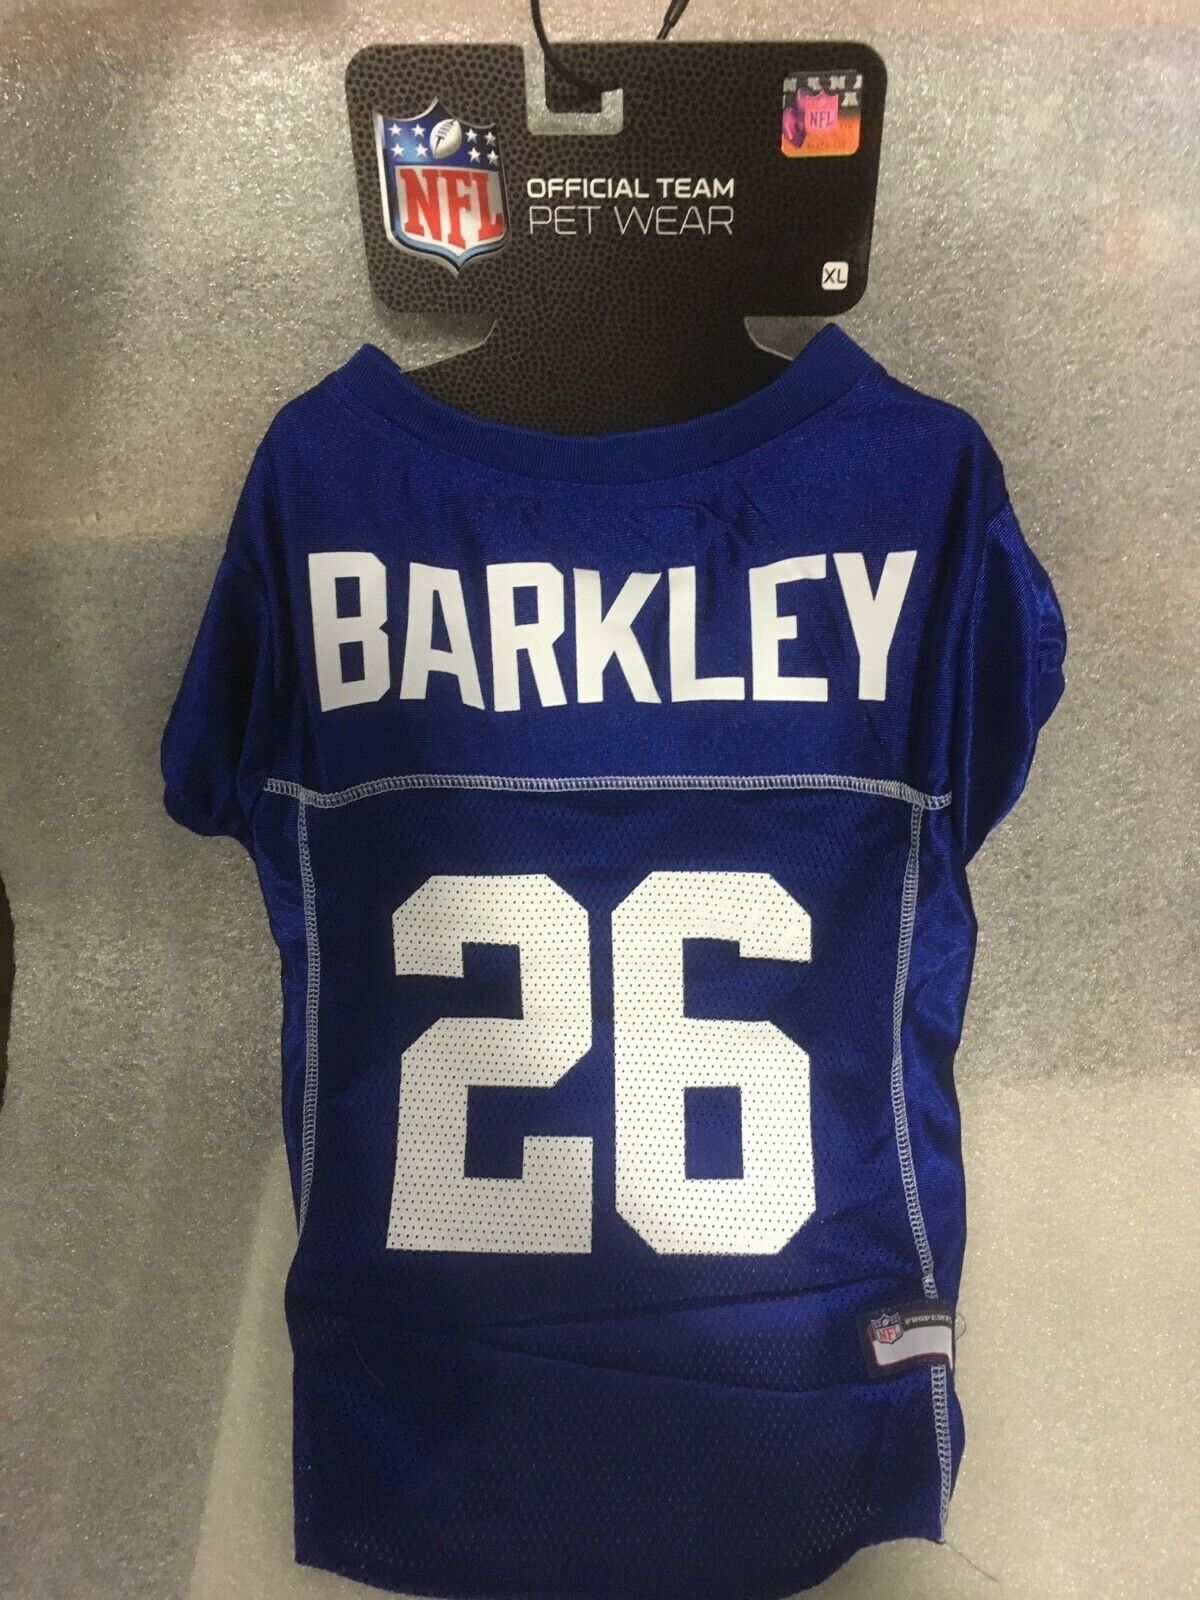 SAQUON BARKLEY #26 New York Giants Licensed NFLPA Dog Jersey Blue, Sizes XS-XL